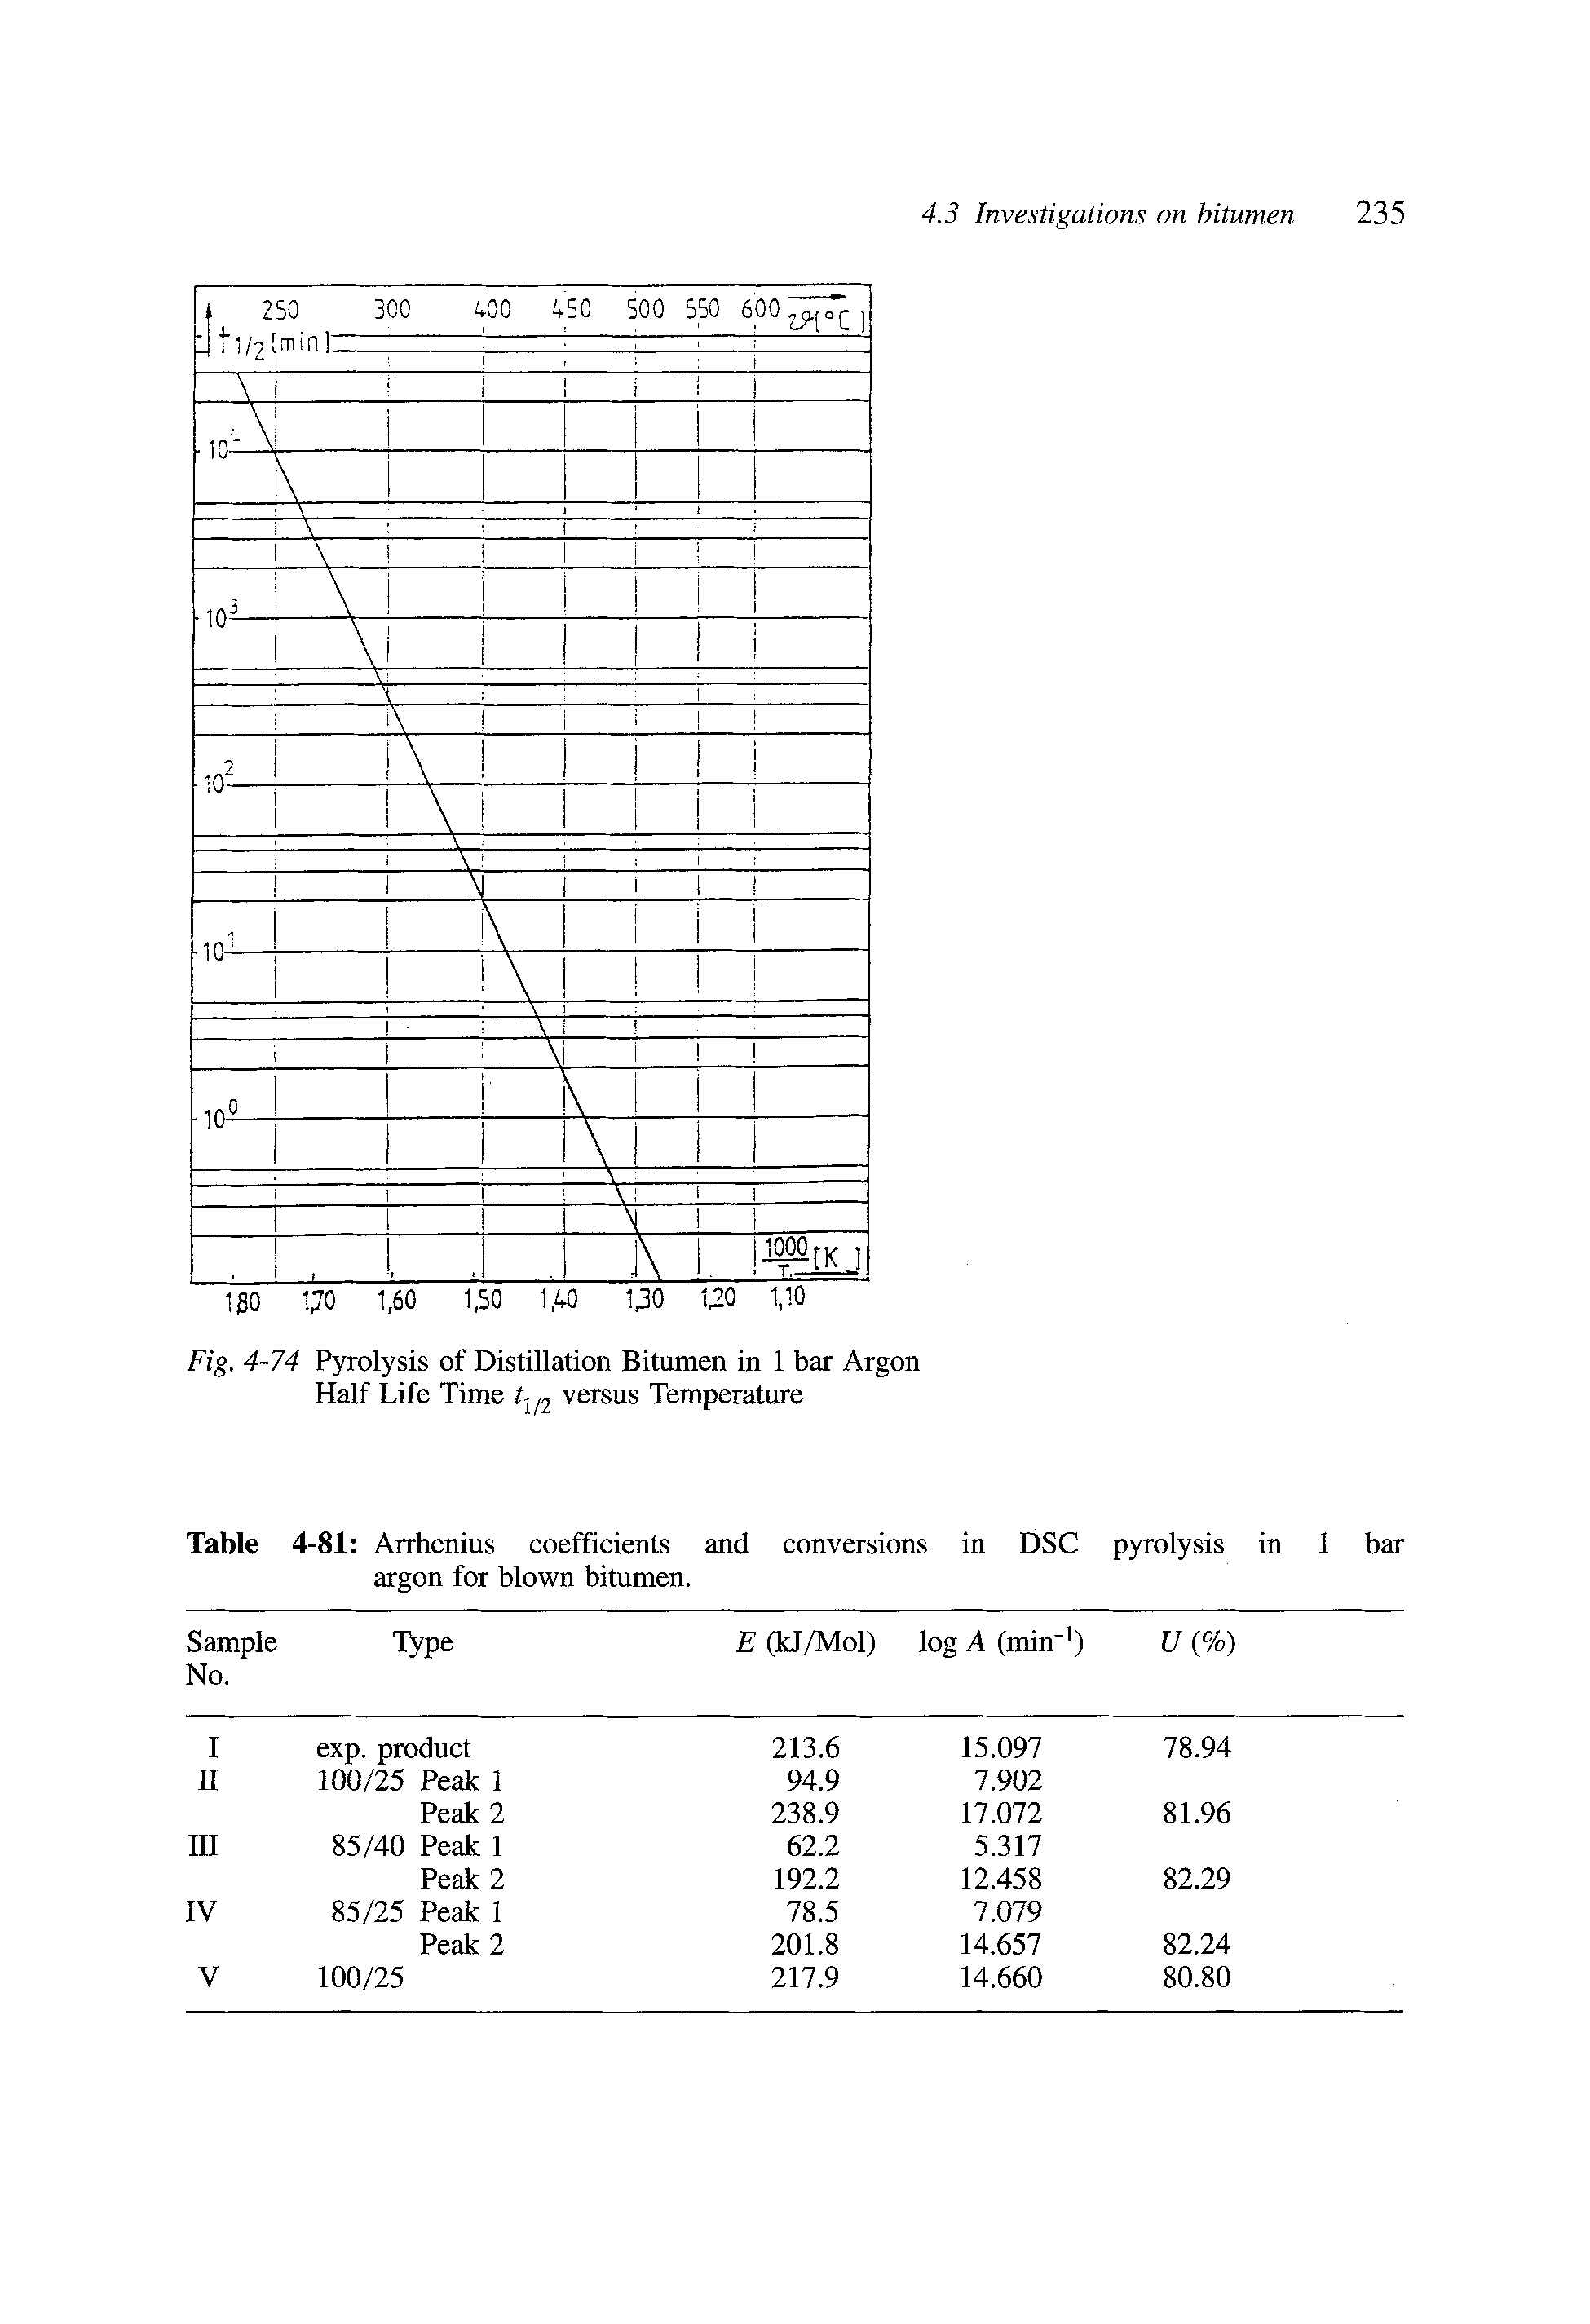 Table 4-81 Arrhenius coefficients and conversions in DSC pyrolysis in 1 bar argon for blown bitumen.